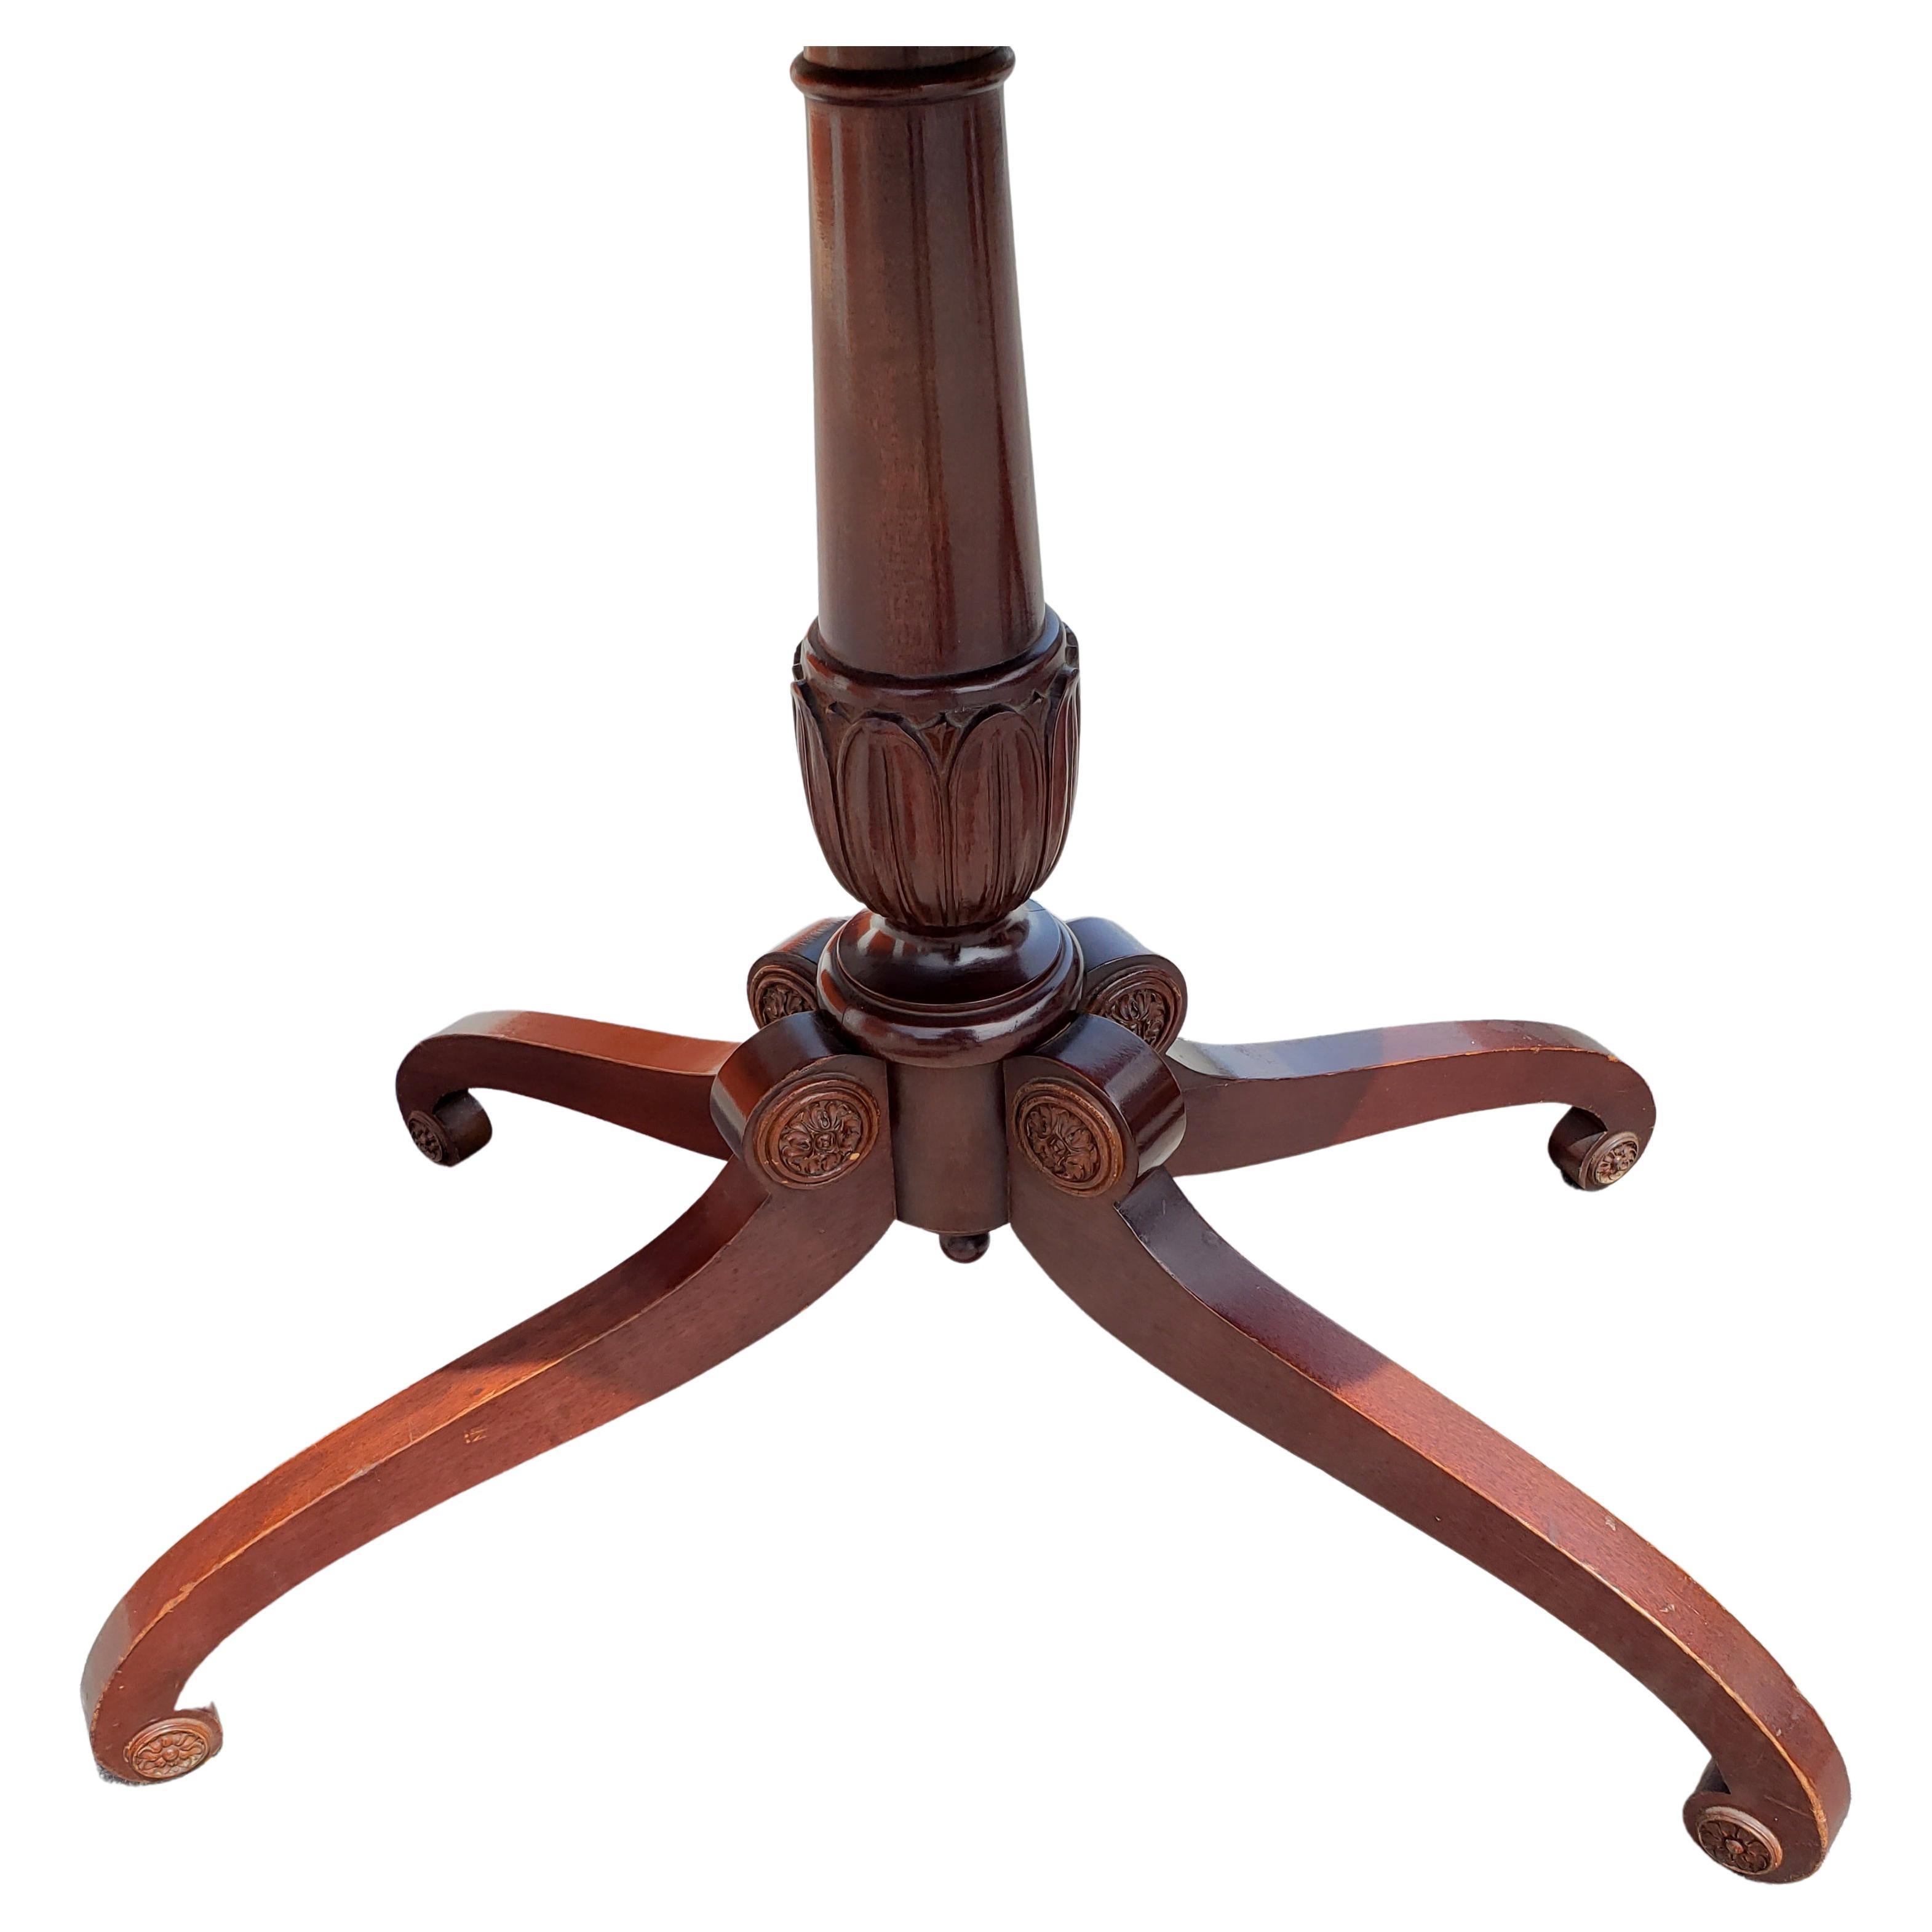 French Regency Mahogany Quad Feet Pedestal Leather Top Tray Table Tea Table 1